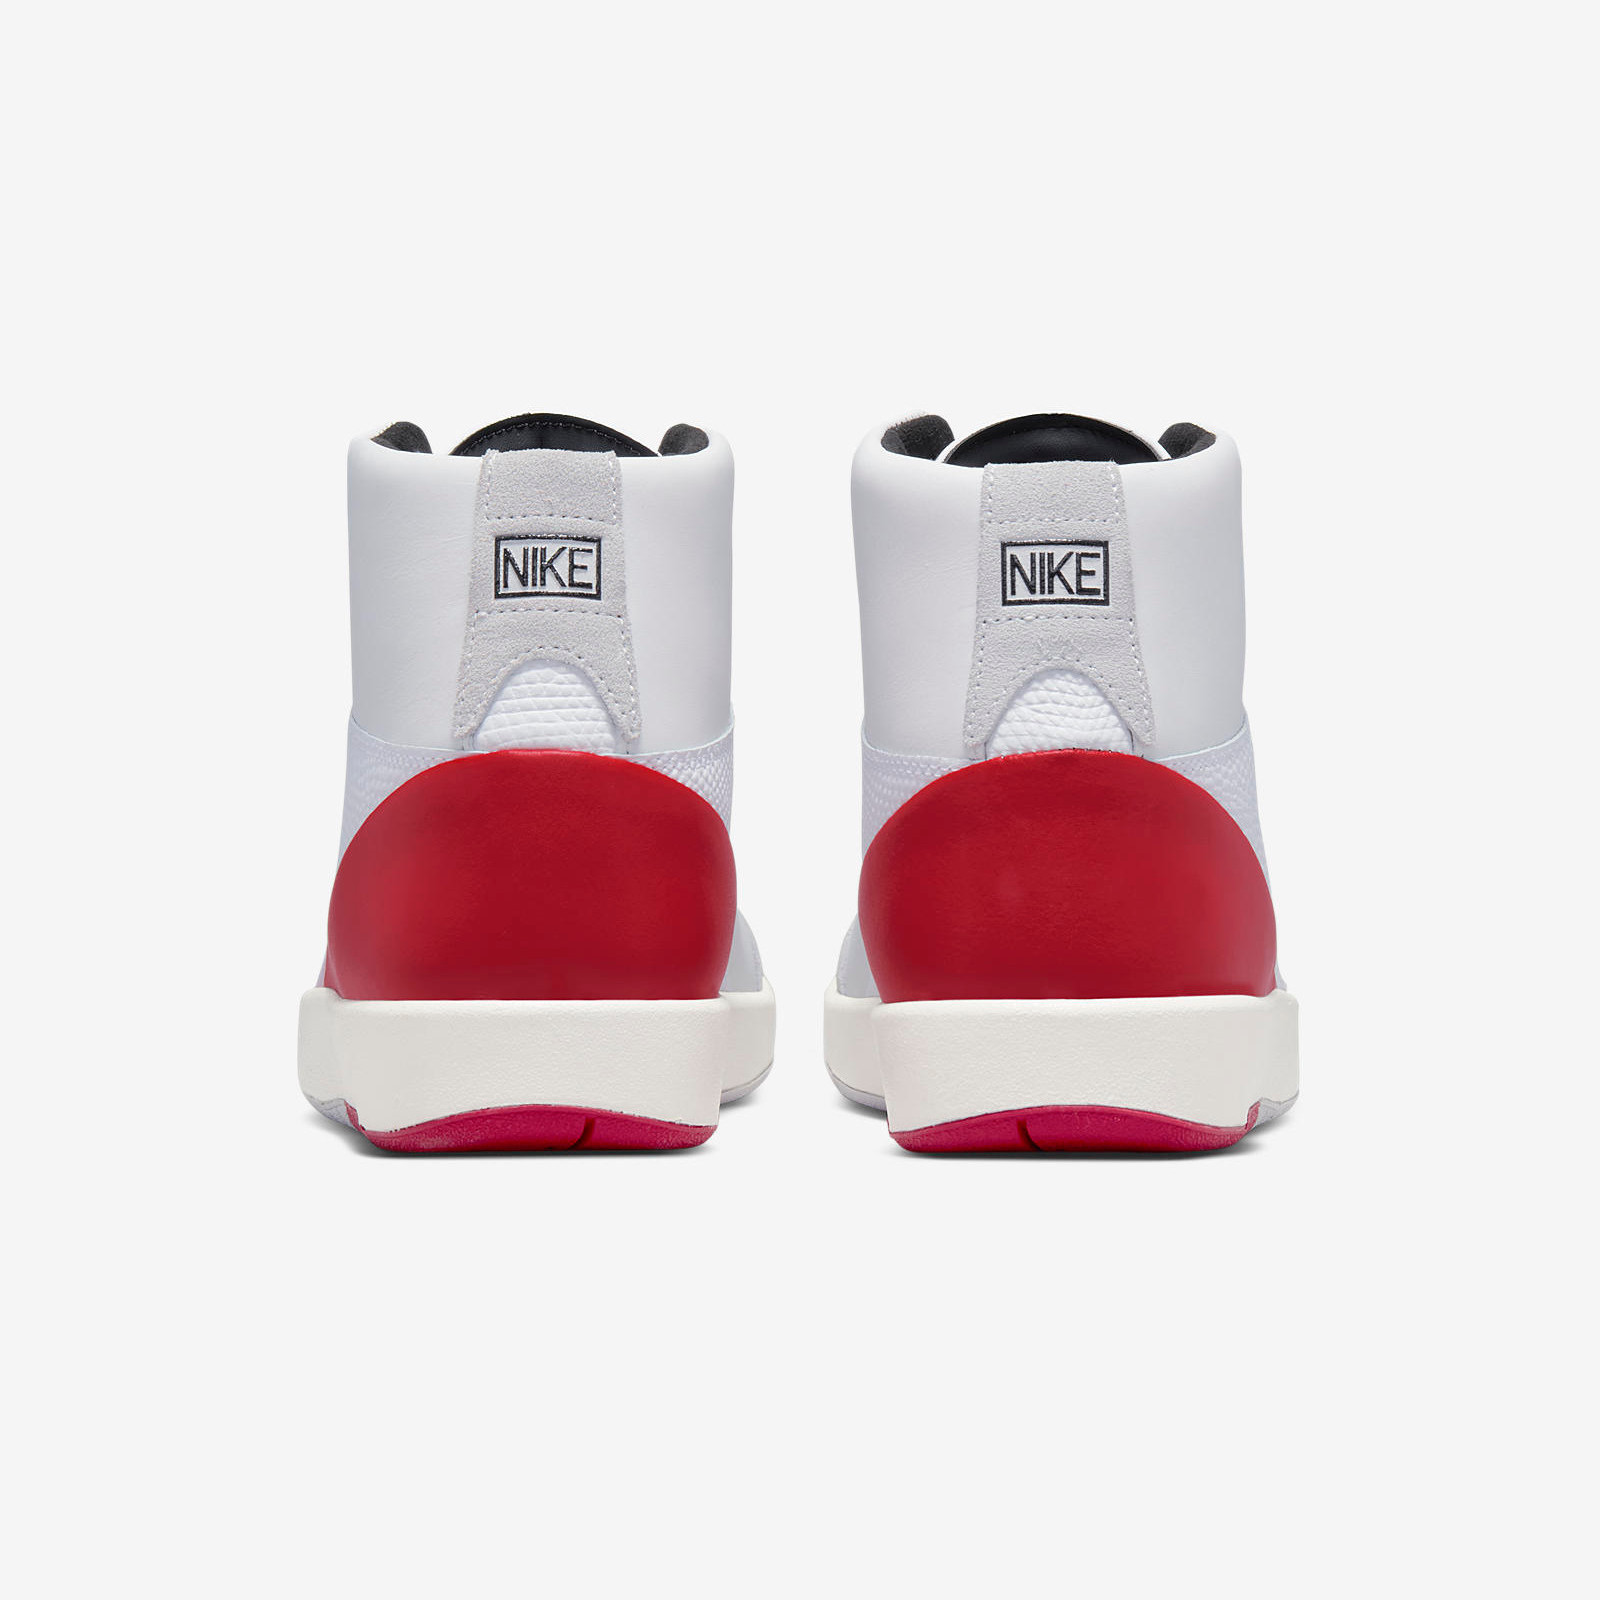 Nina Chanel Abney x Air Jordan 2
White / Red